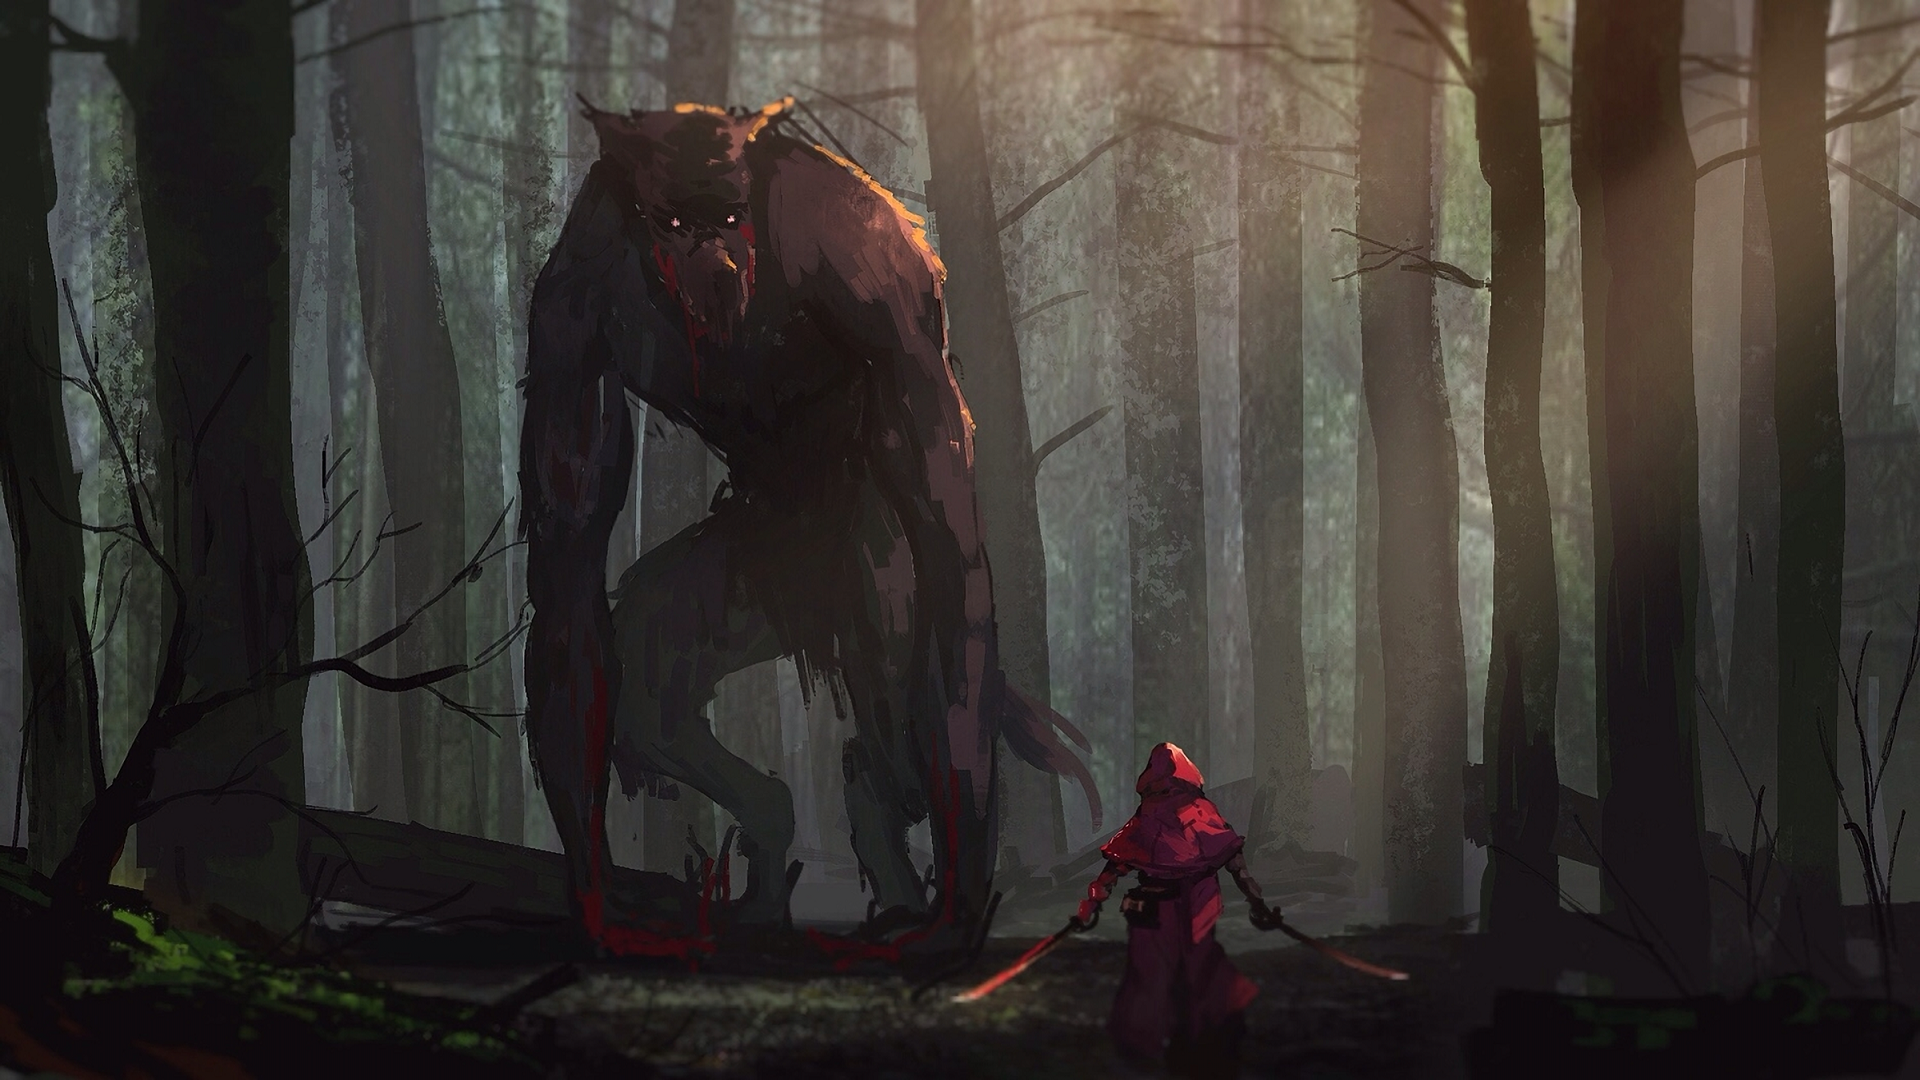 Werewolves Sword Little Red Riding Hood Wood Hoods Trees Weapon Fairy Tale 1920x1080